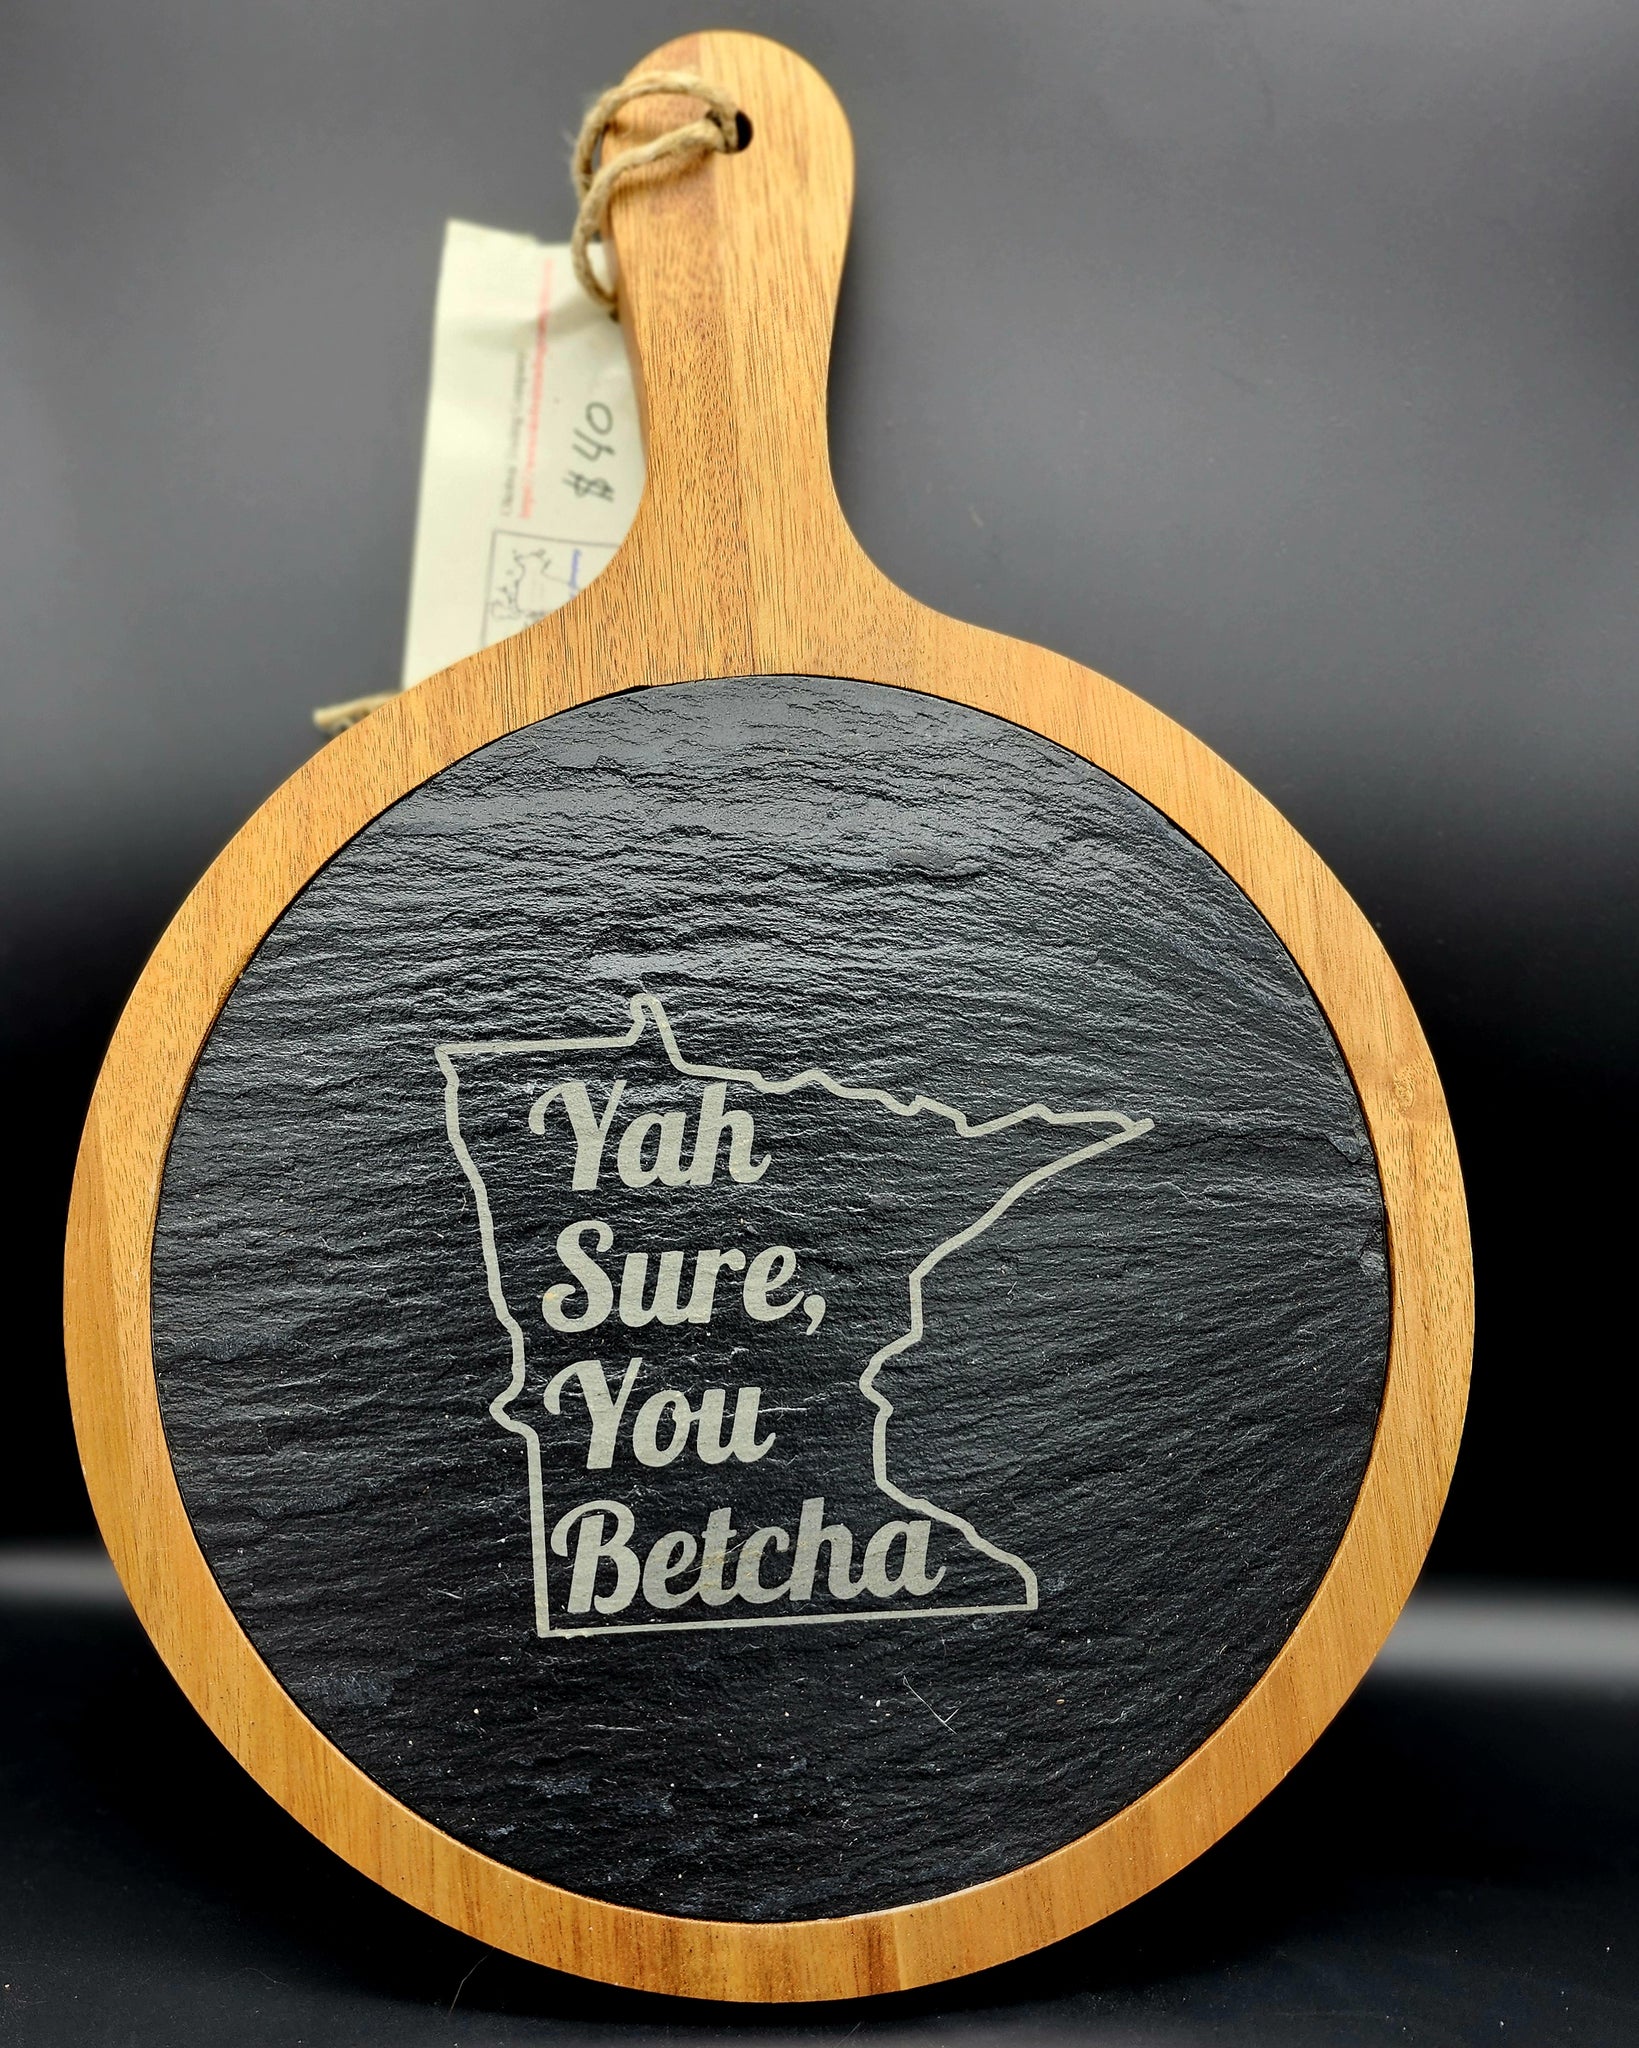 Minnesota Acacia Wood/Slate Serving Board with Handle -"Yah Sure You Betcha"  8 1/4" x 12 1/4" - Gift - Charming